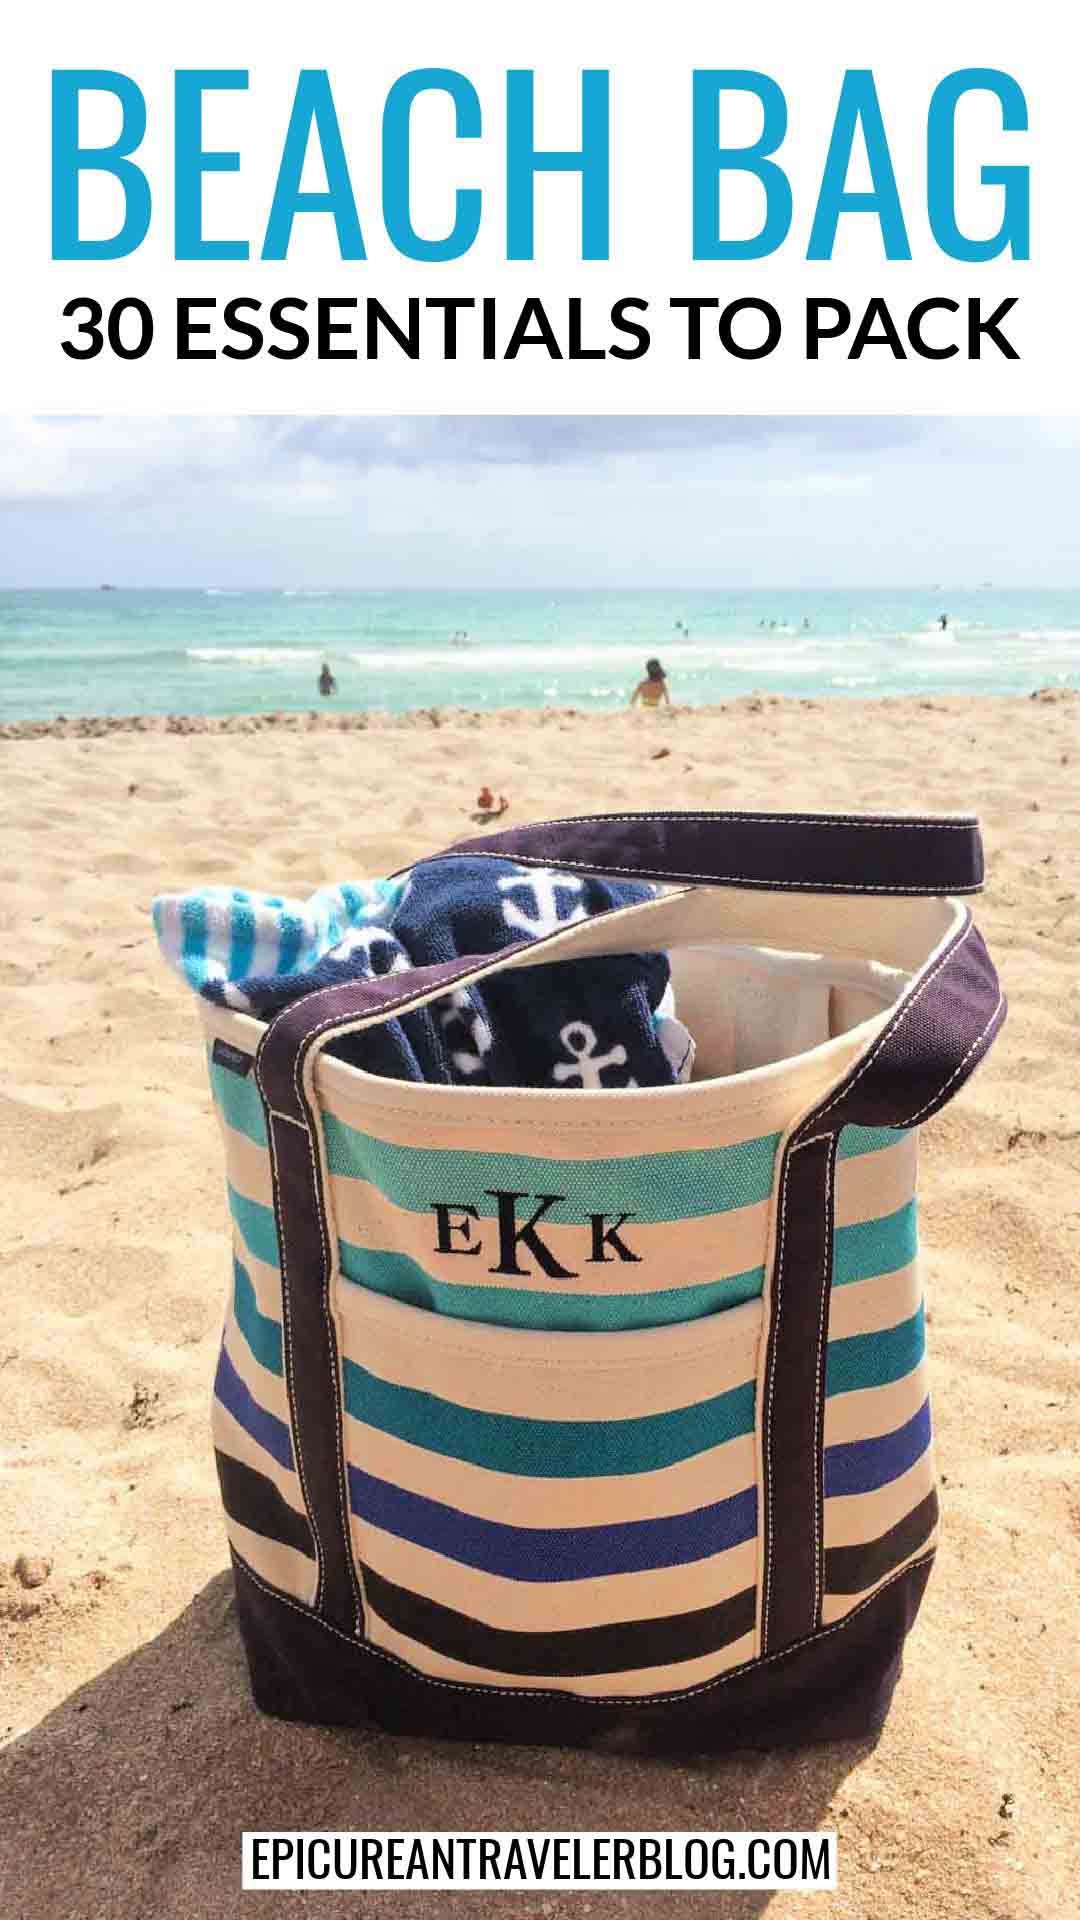 30 beach bag essentials to pack for your next beach trip